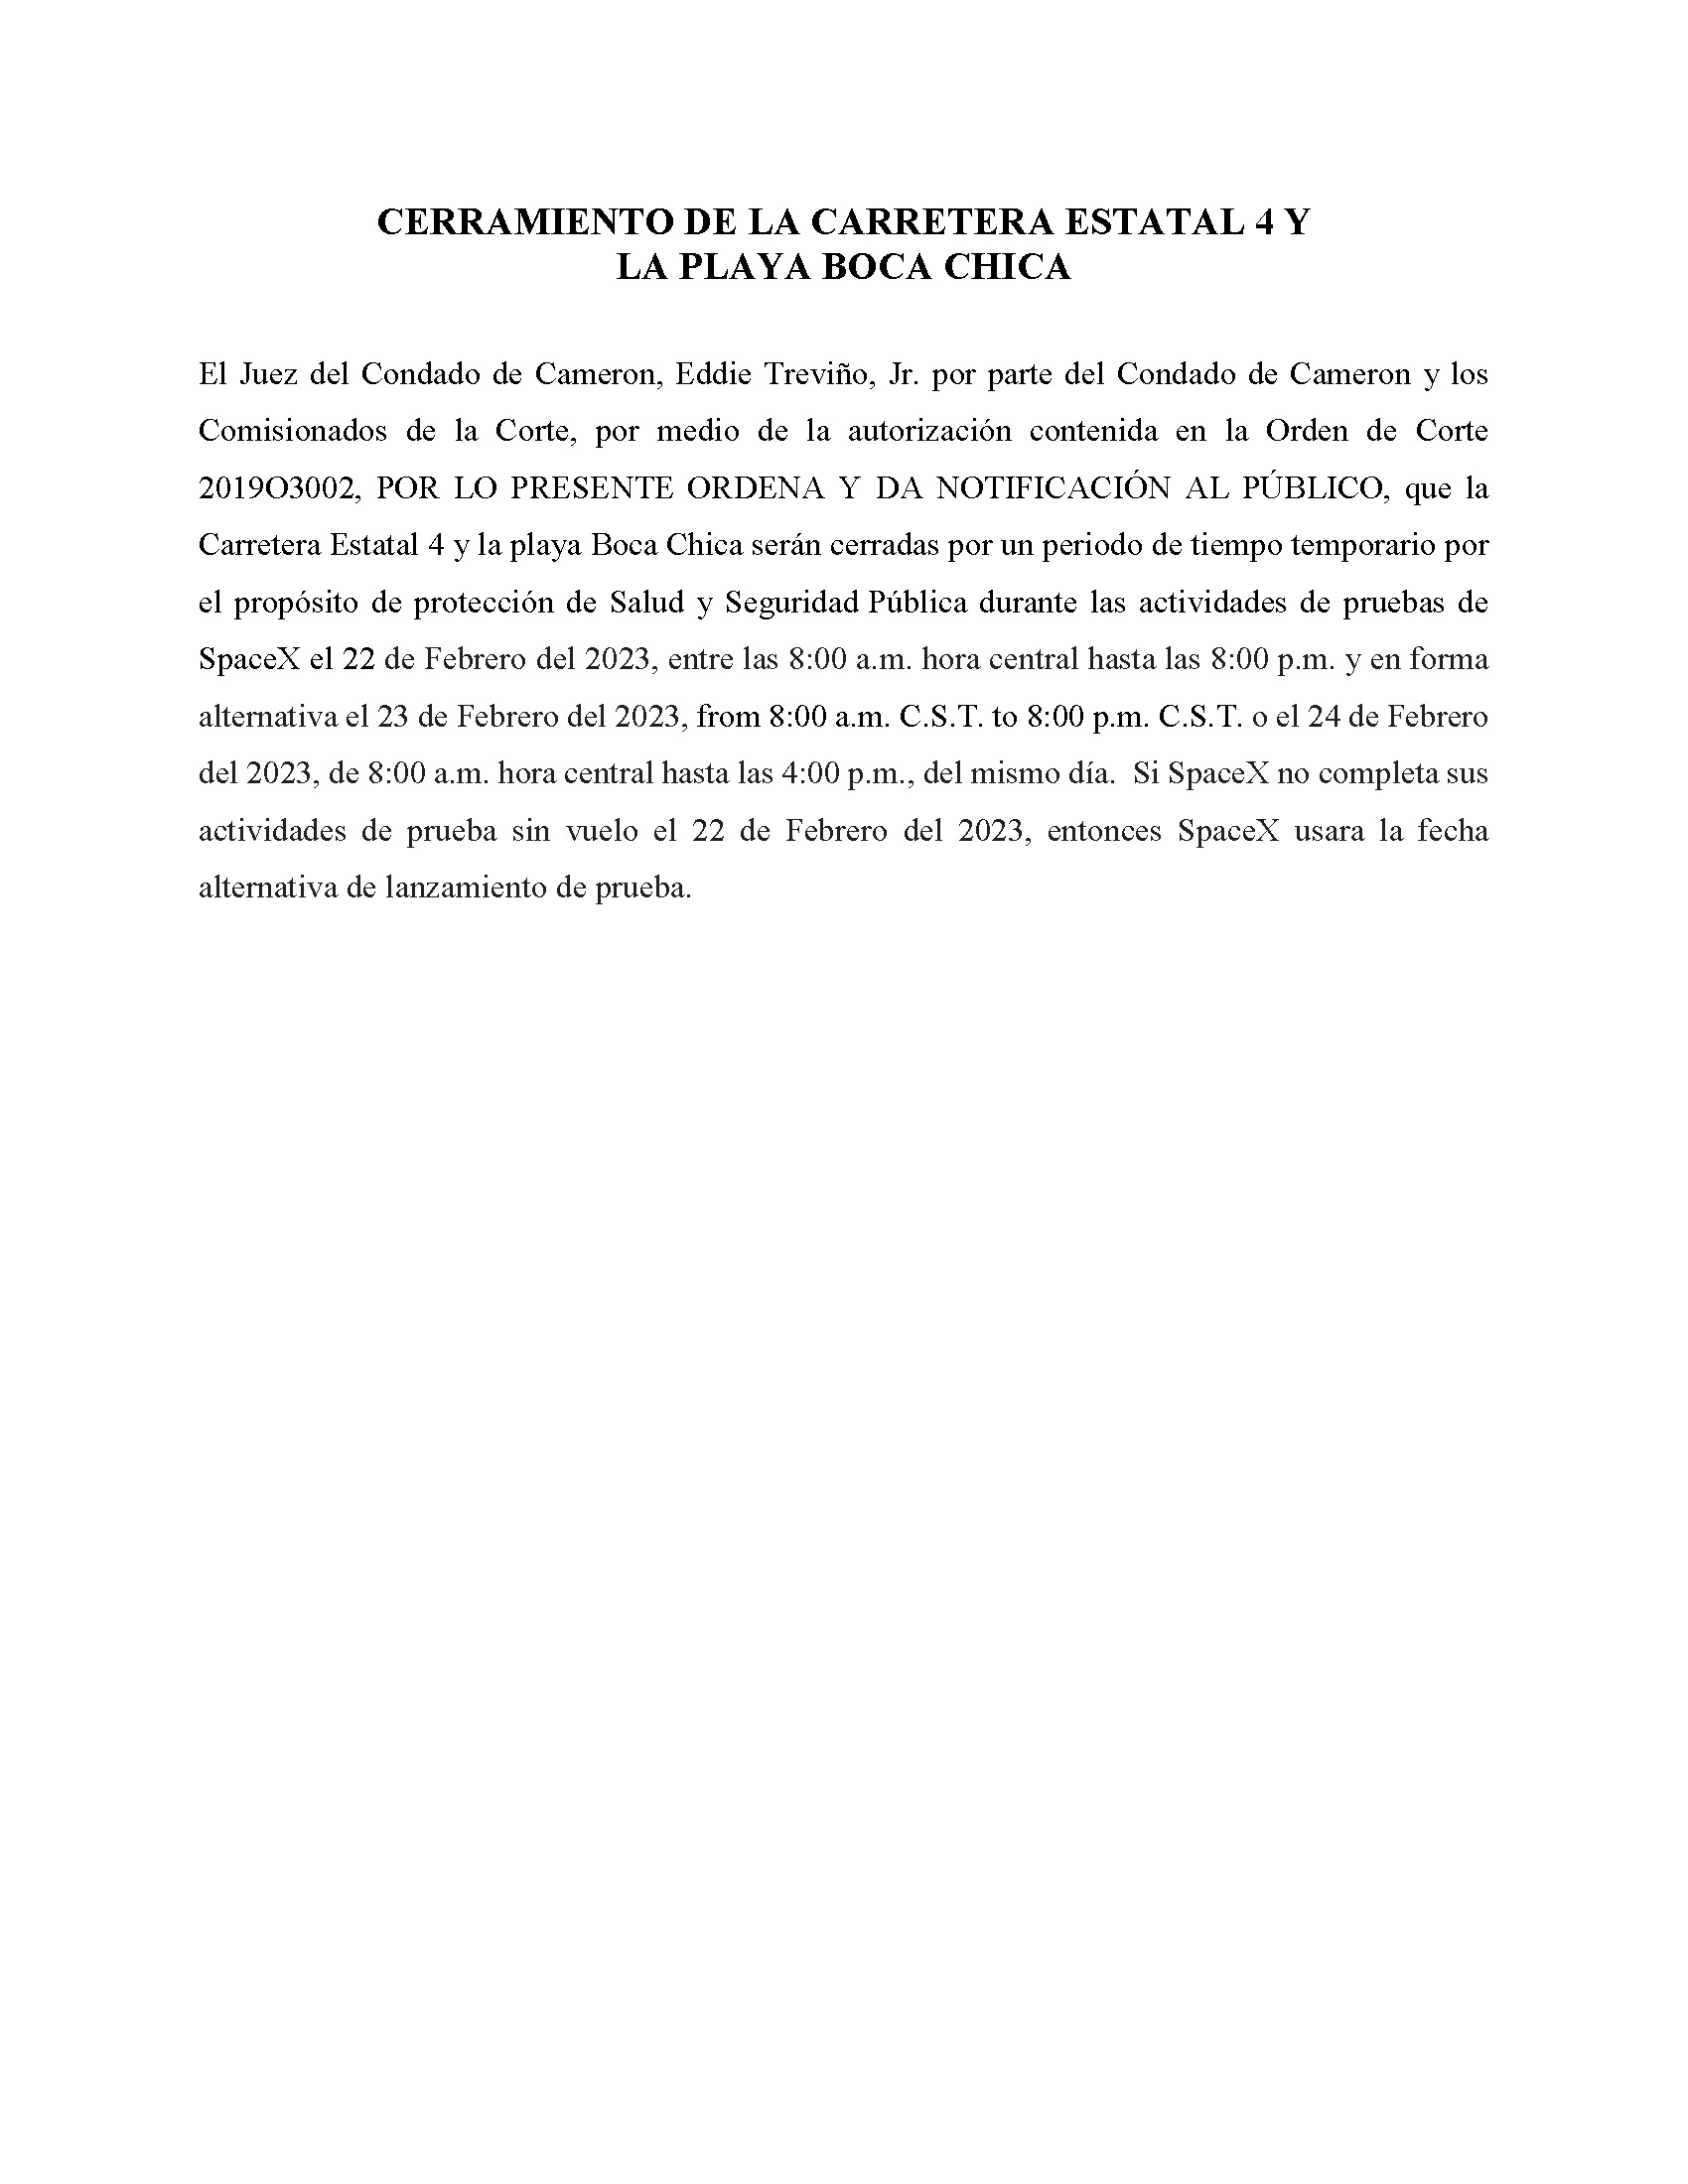 ORDER.CLOSURE OF HIGHWAY 4 Y LA PLAYA BOCA CHICA.SPANISH.02.22.23